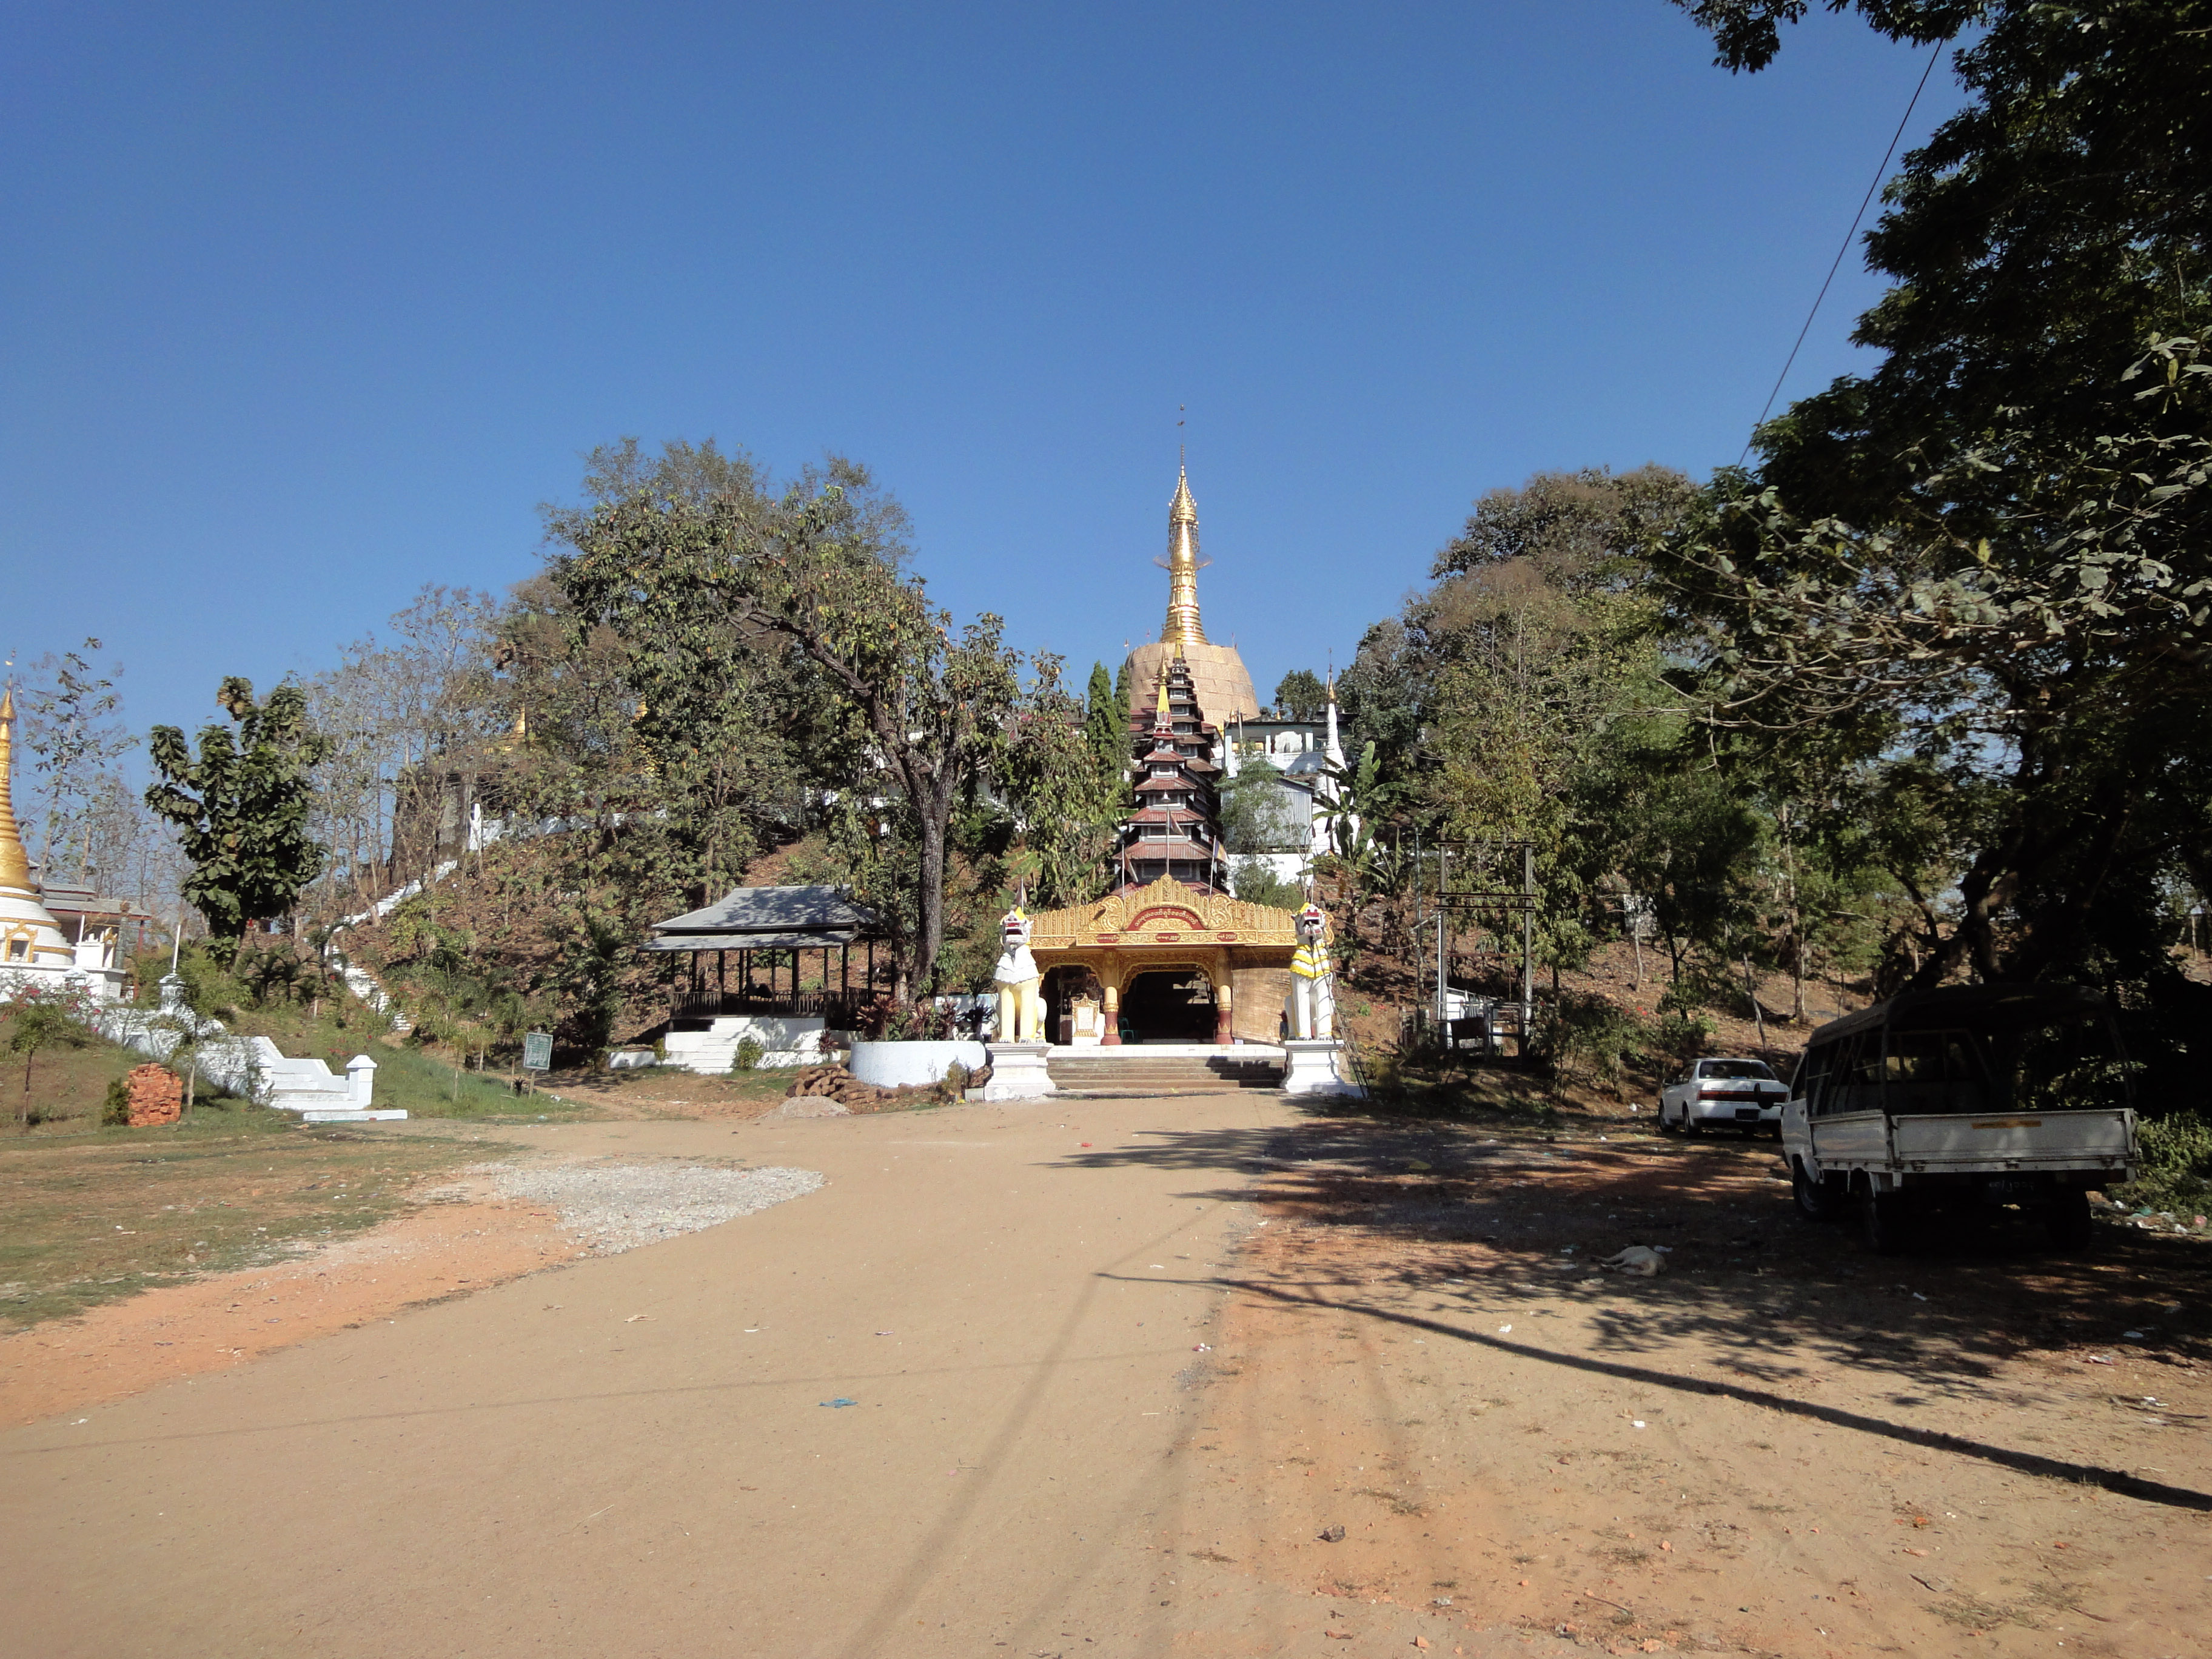 Asisbiz Photos of Thanboddhay Pagoda, Mohnyin Forest Monastery retreat3648 x 2736